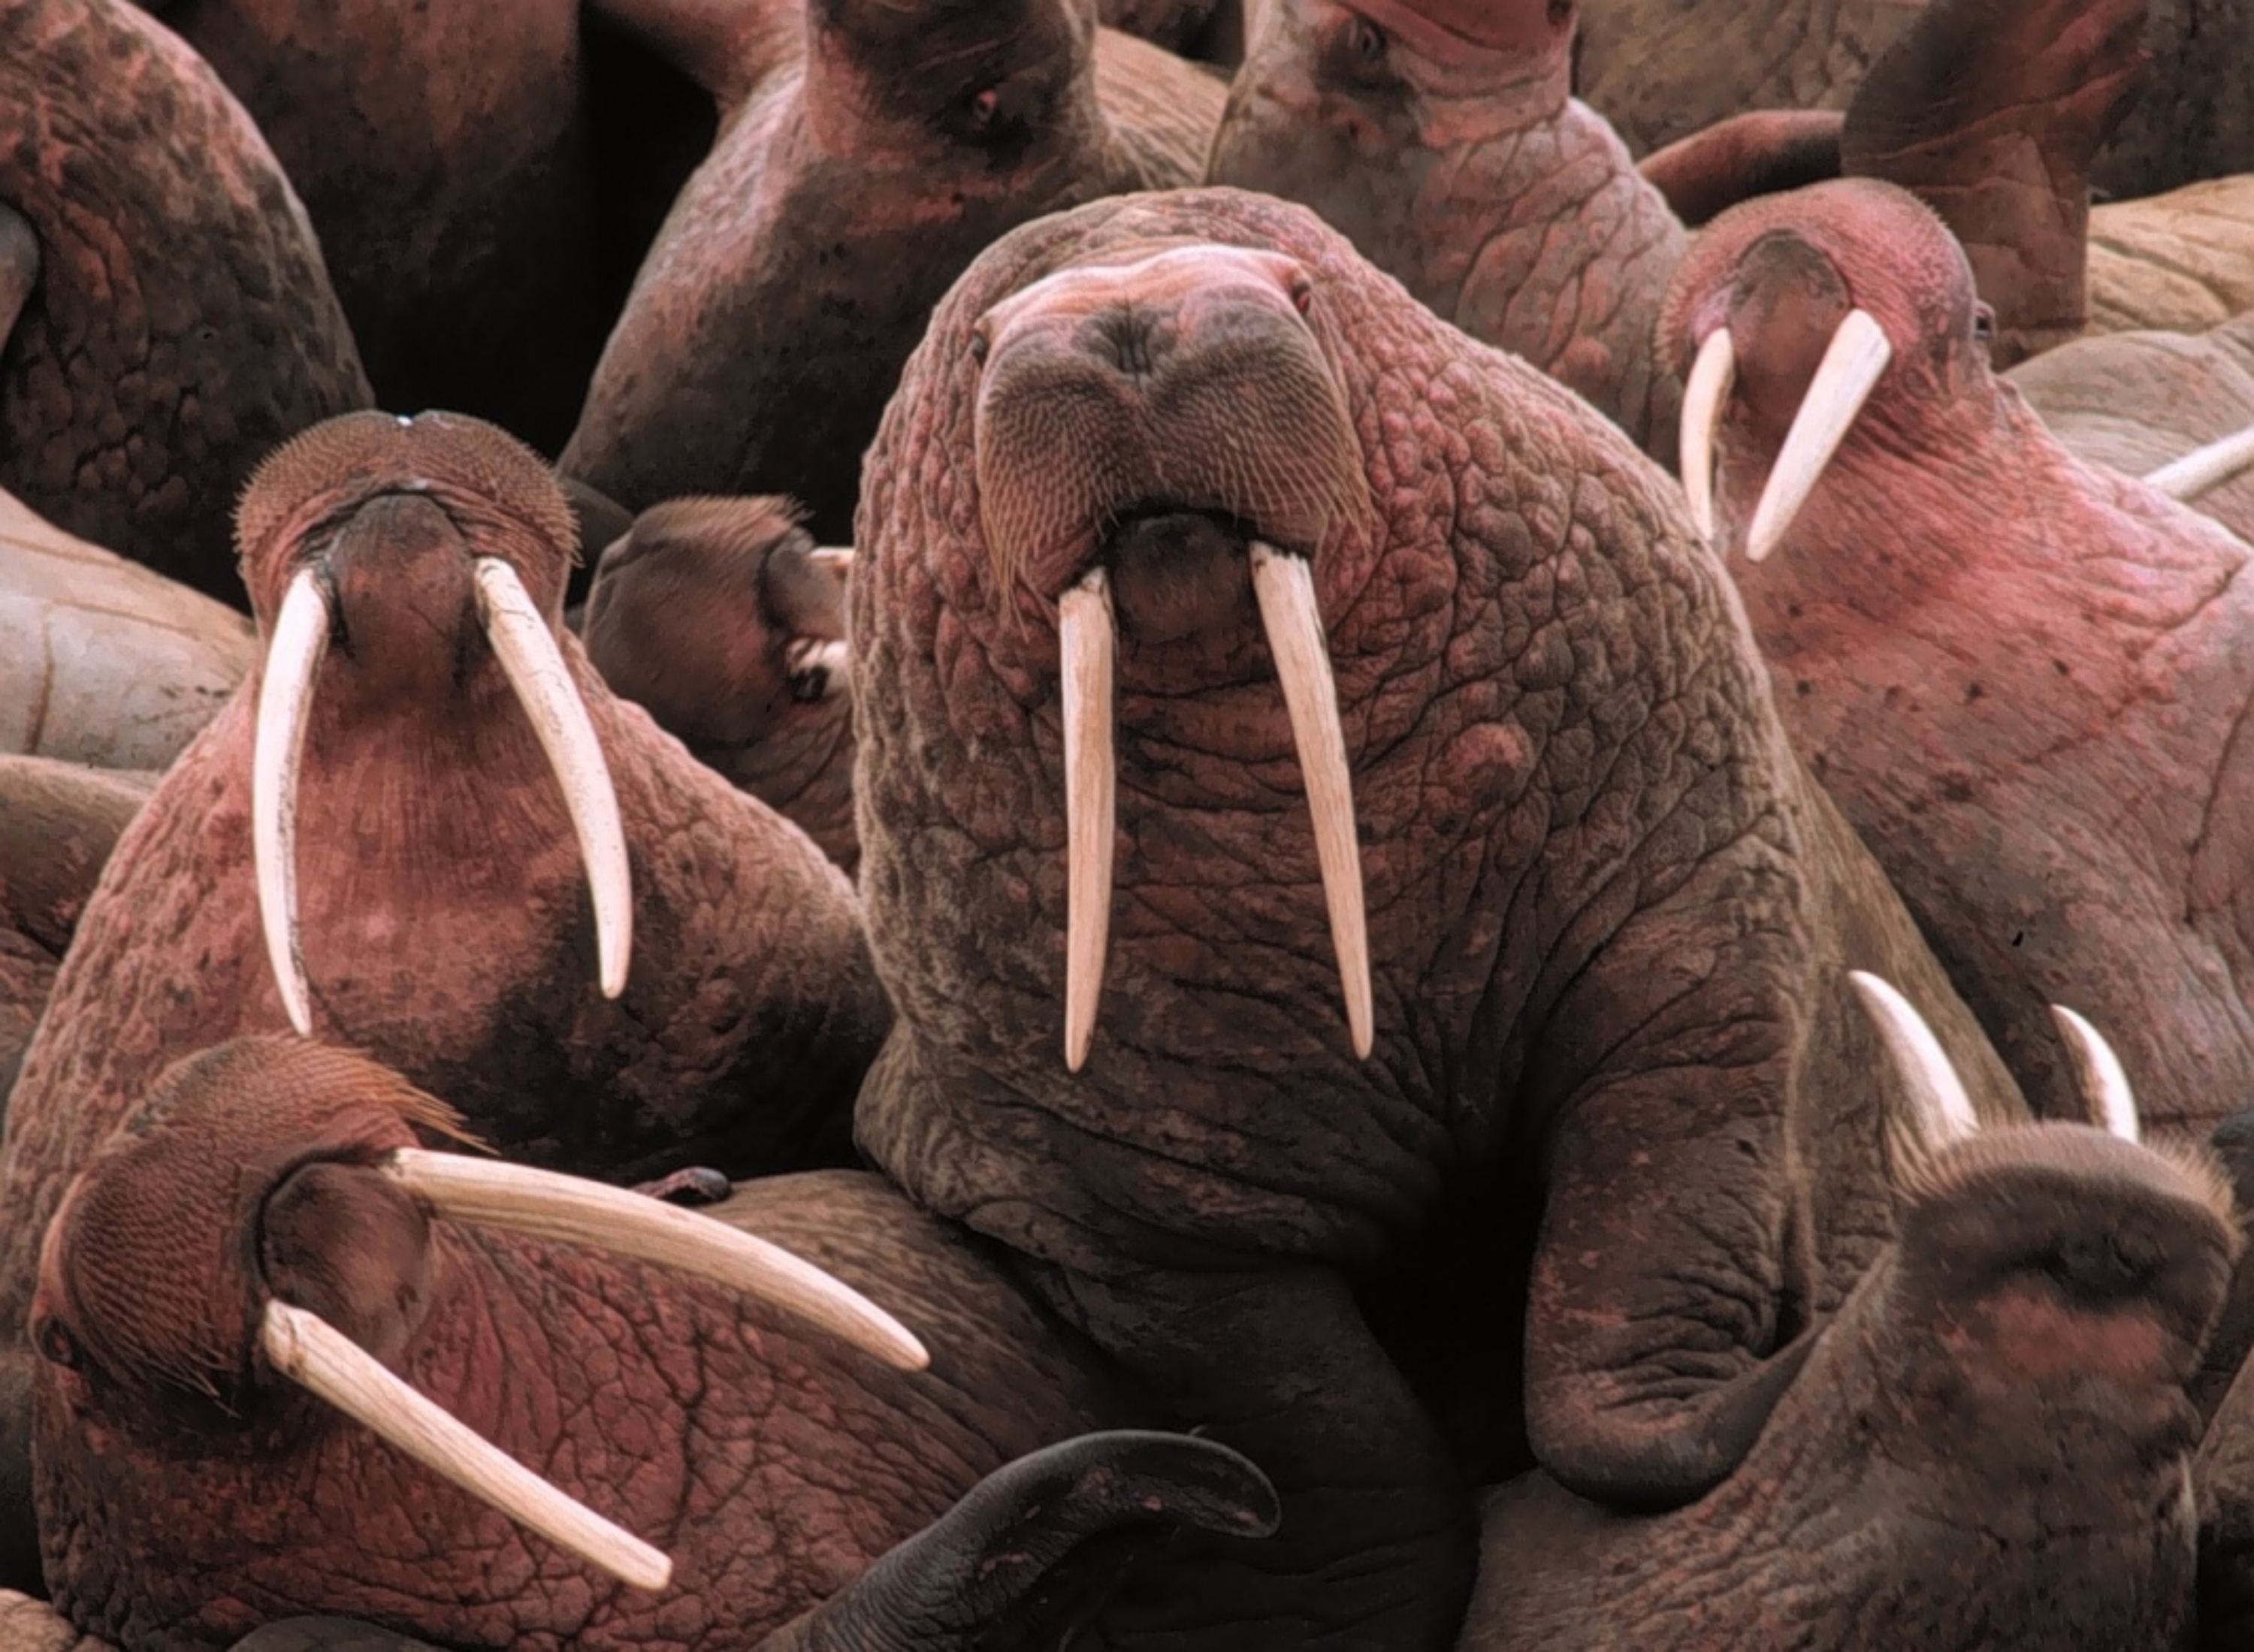 horrible walrus photos image